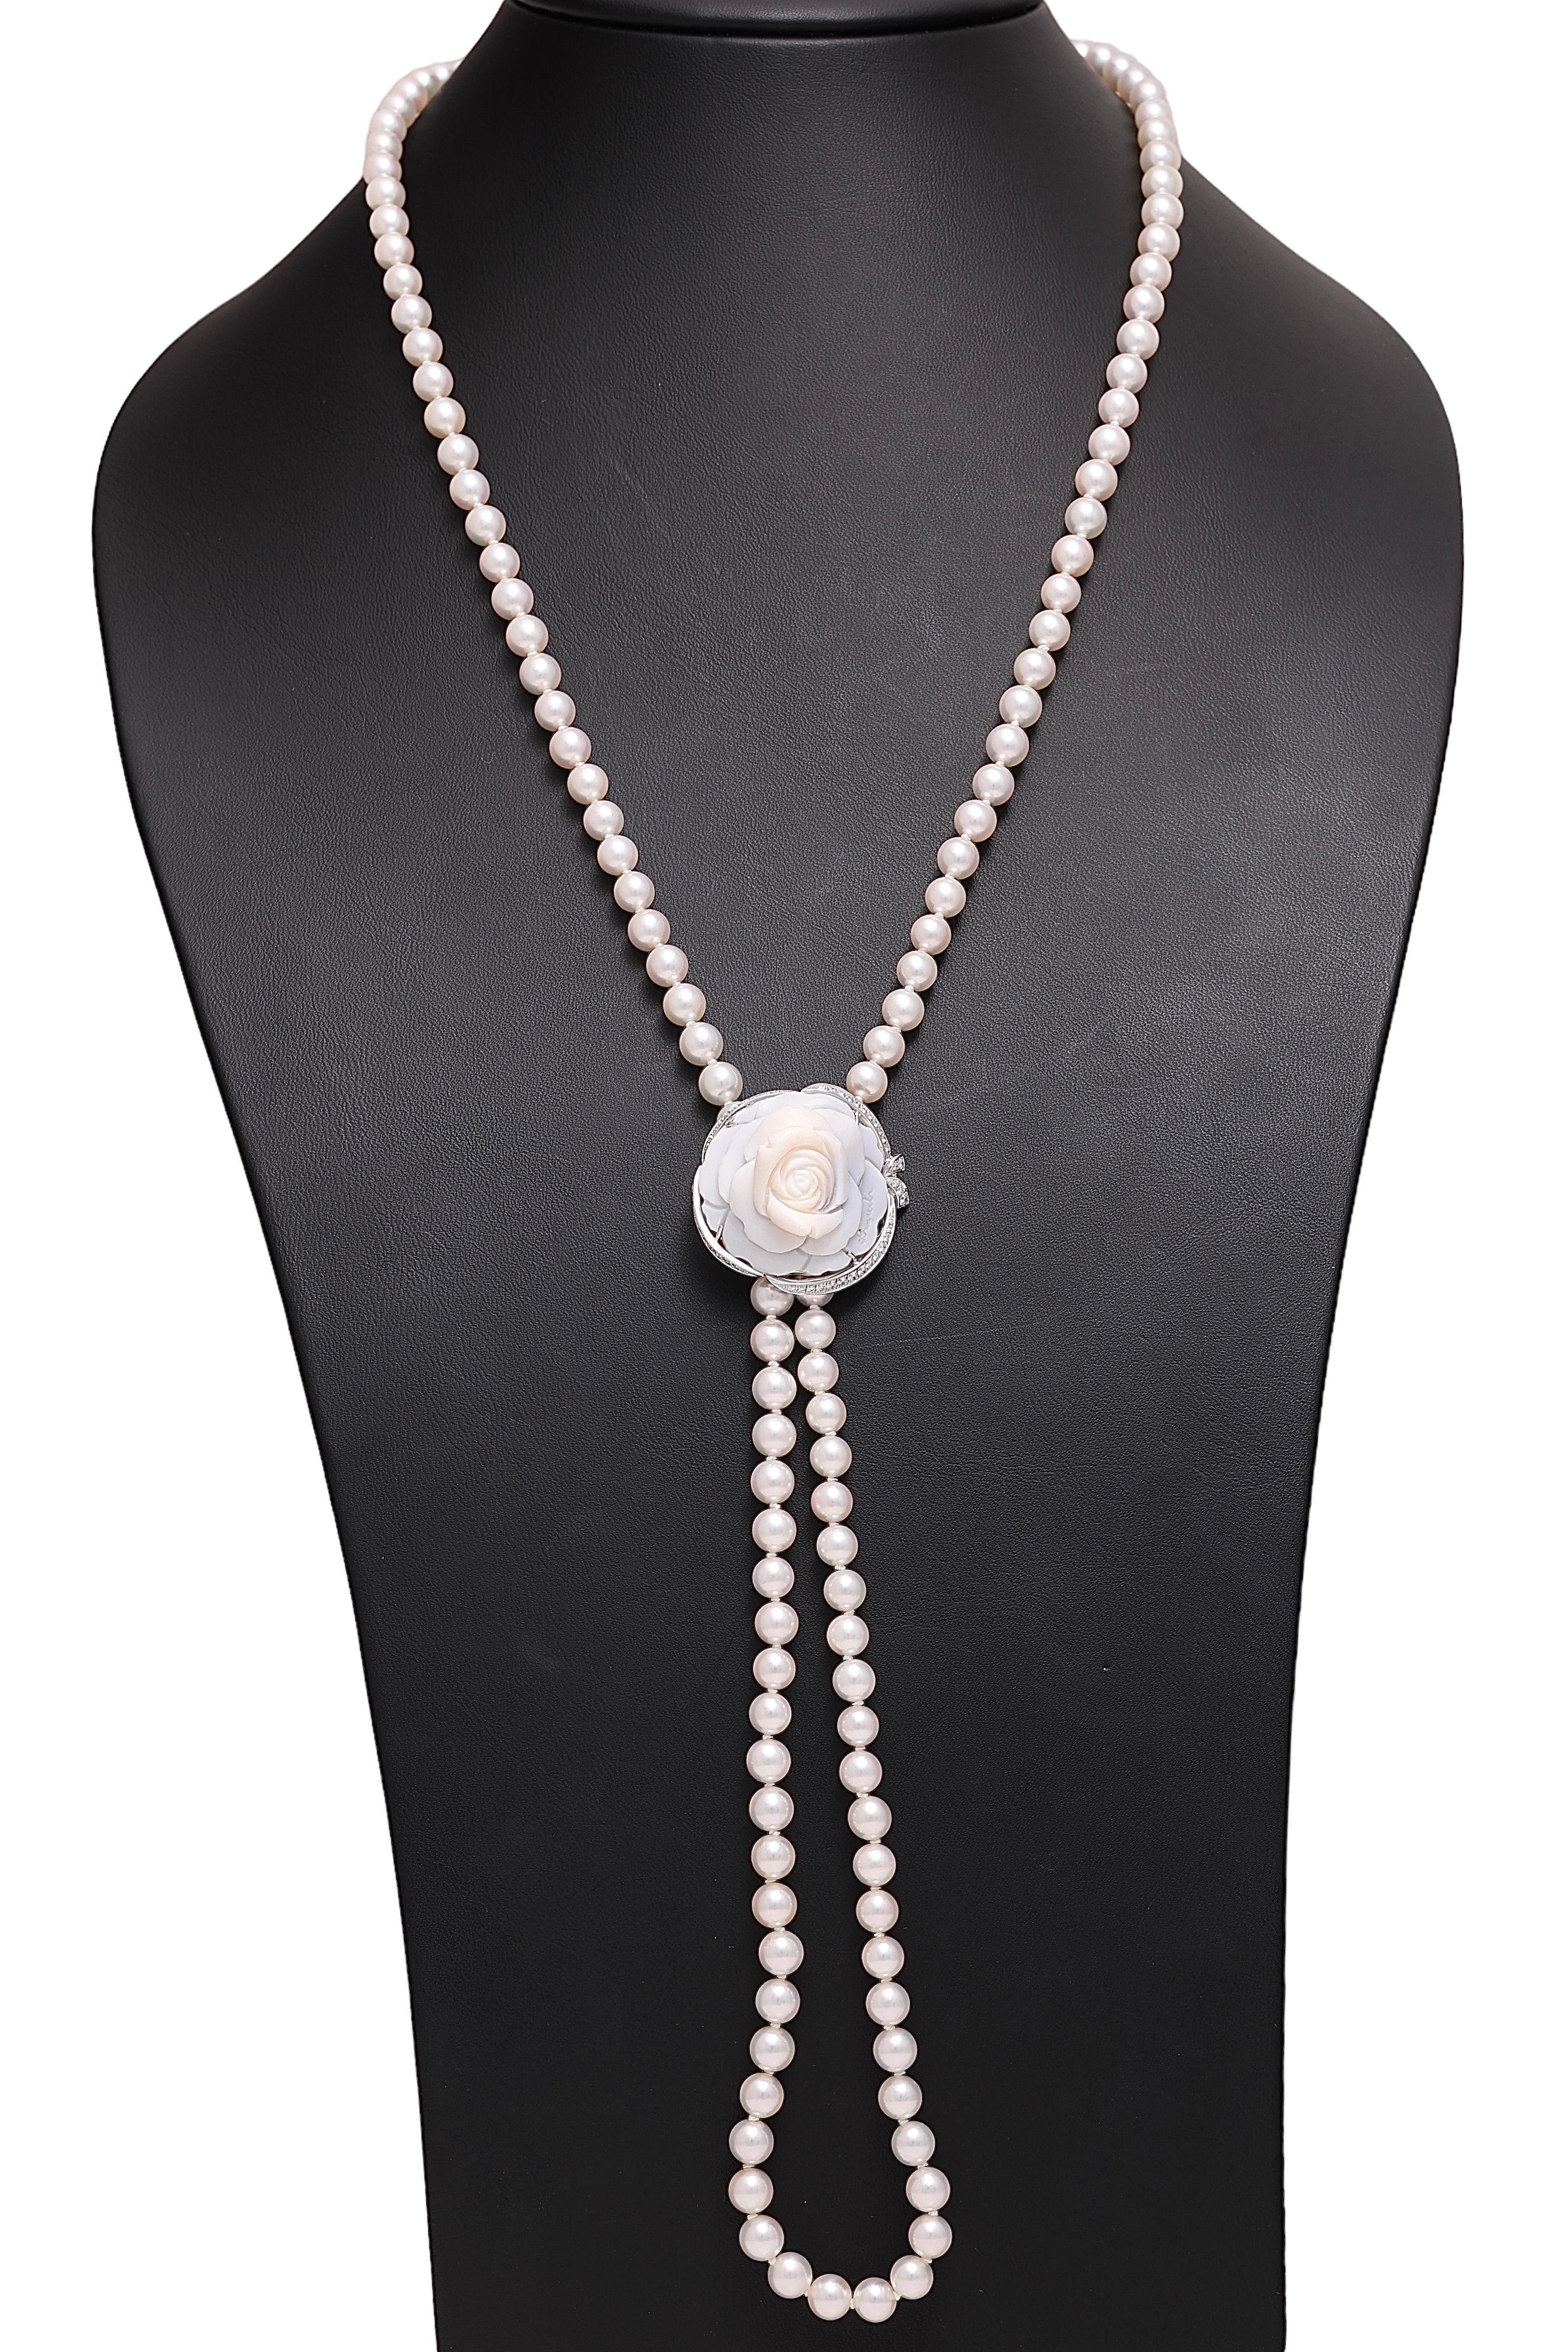 18 Kt Breguet Diamonds Pearl Necklace / Brooch / Earrings Flower Cameo s

Measurements:  

Necklace / Brooch
the necklace is 49 cm long  
Brooch: 28.9mm x 29.8mm x 17.4mm
Total weight necklace: 58.6 gram

Earrings; 20.6mm x 19.4mm x 18.0mm
total